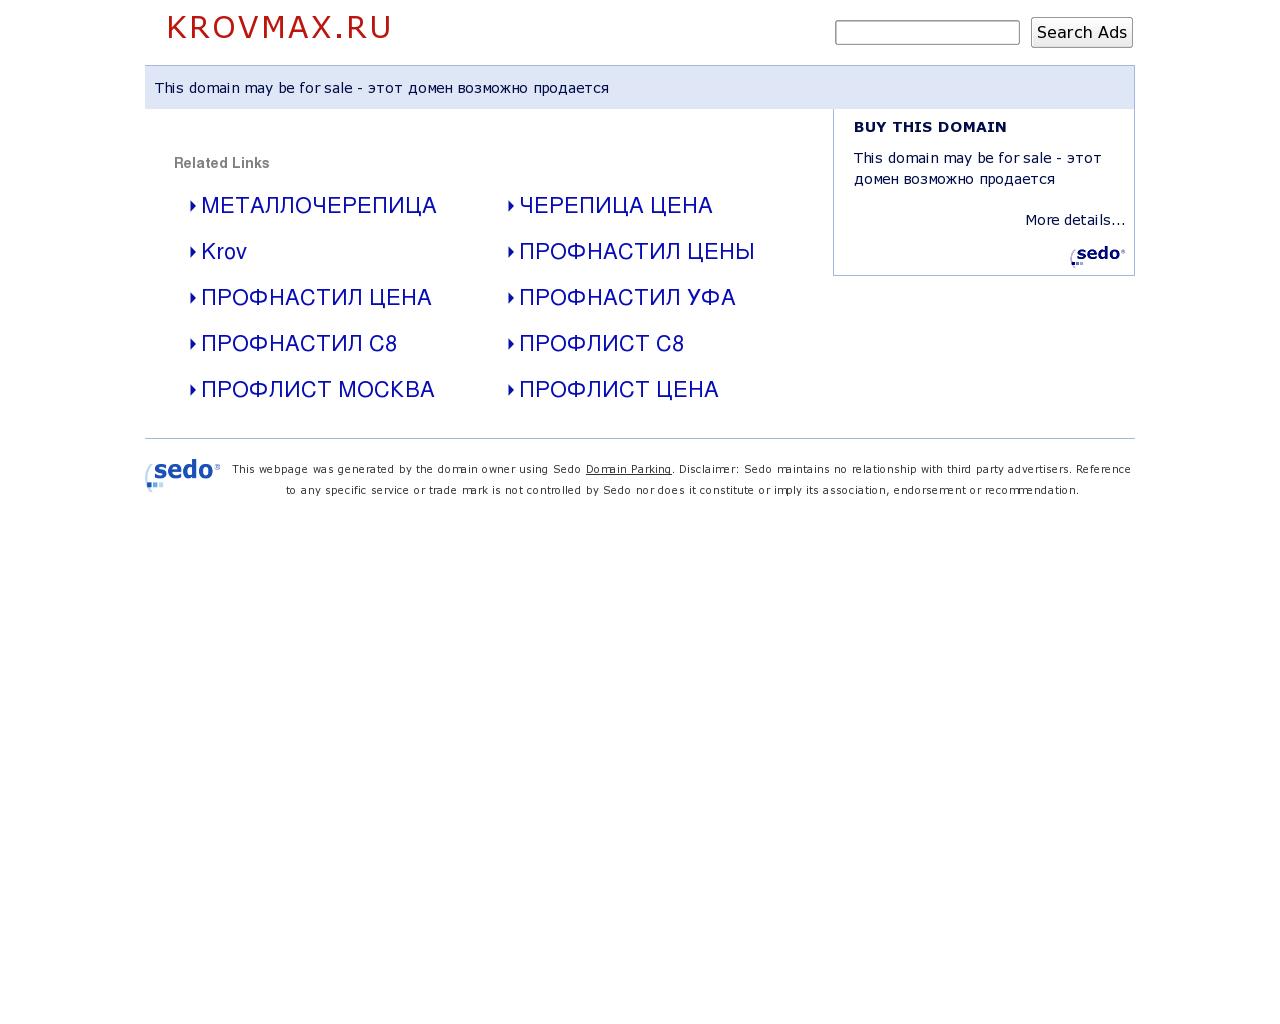 Изображение сайта krovmax.ru в разрешении 1280x1024